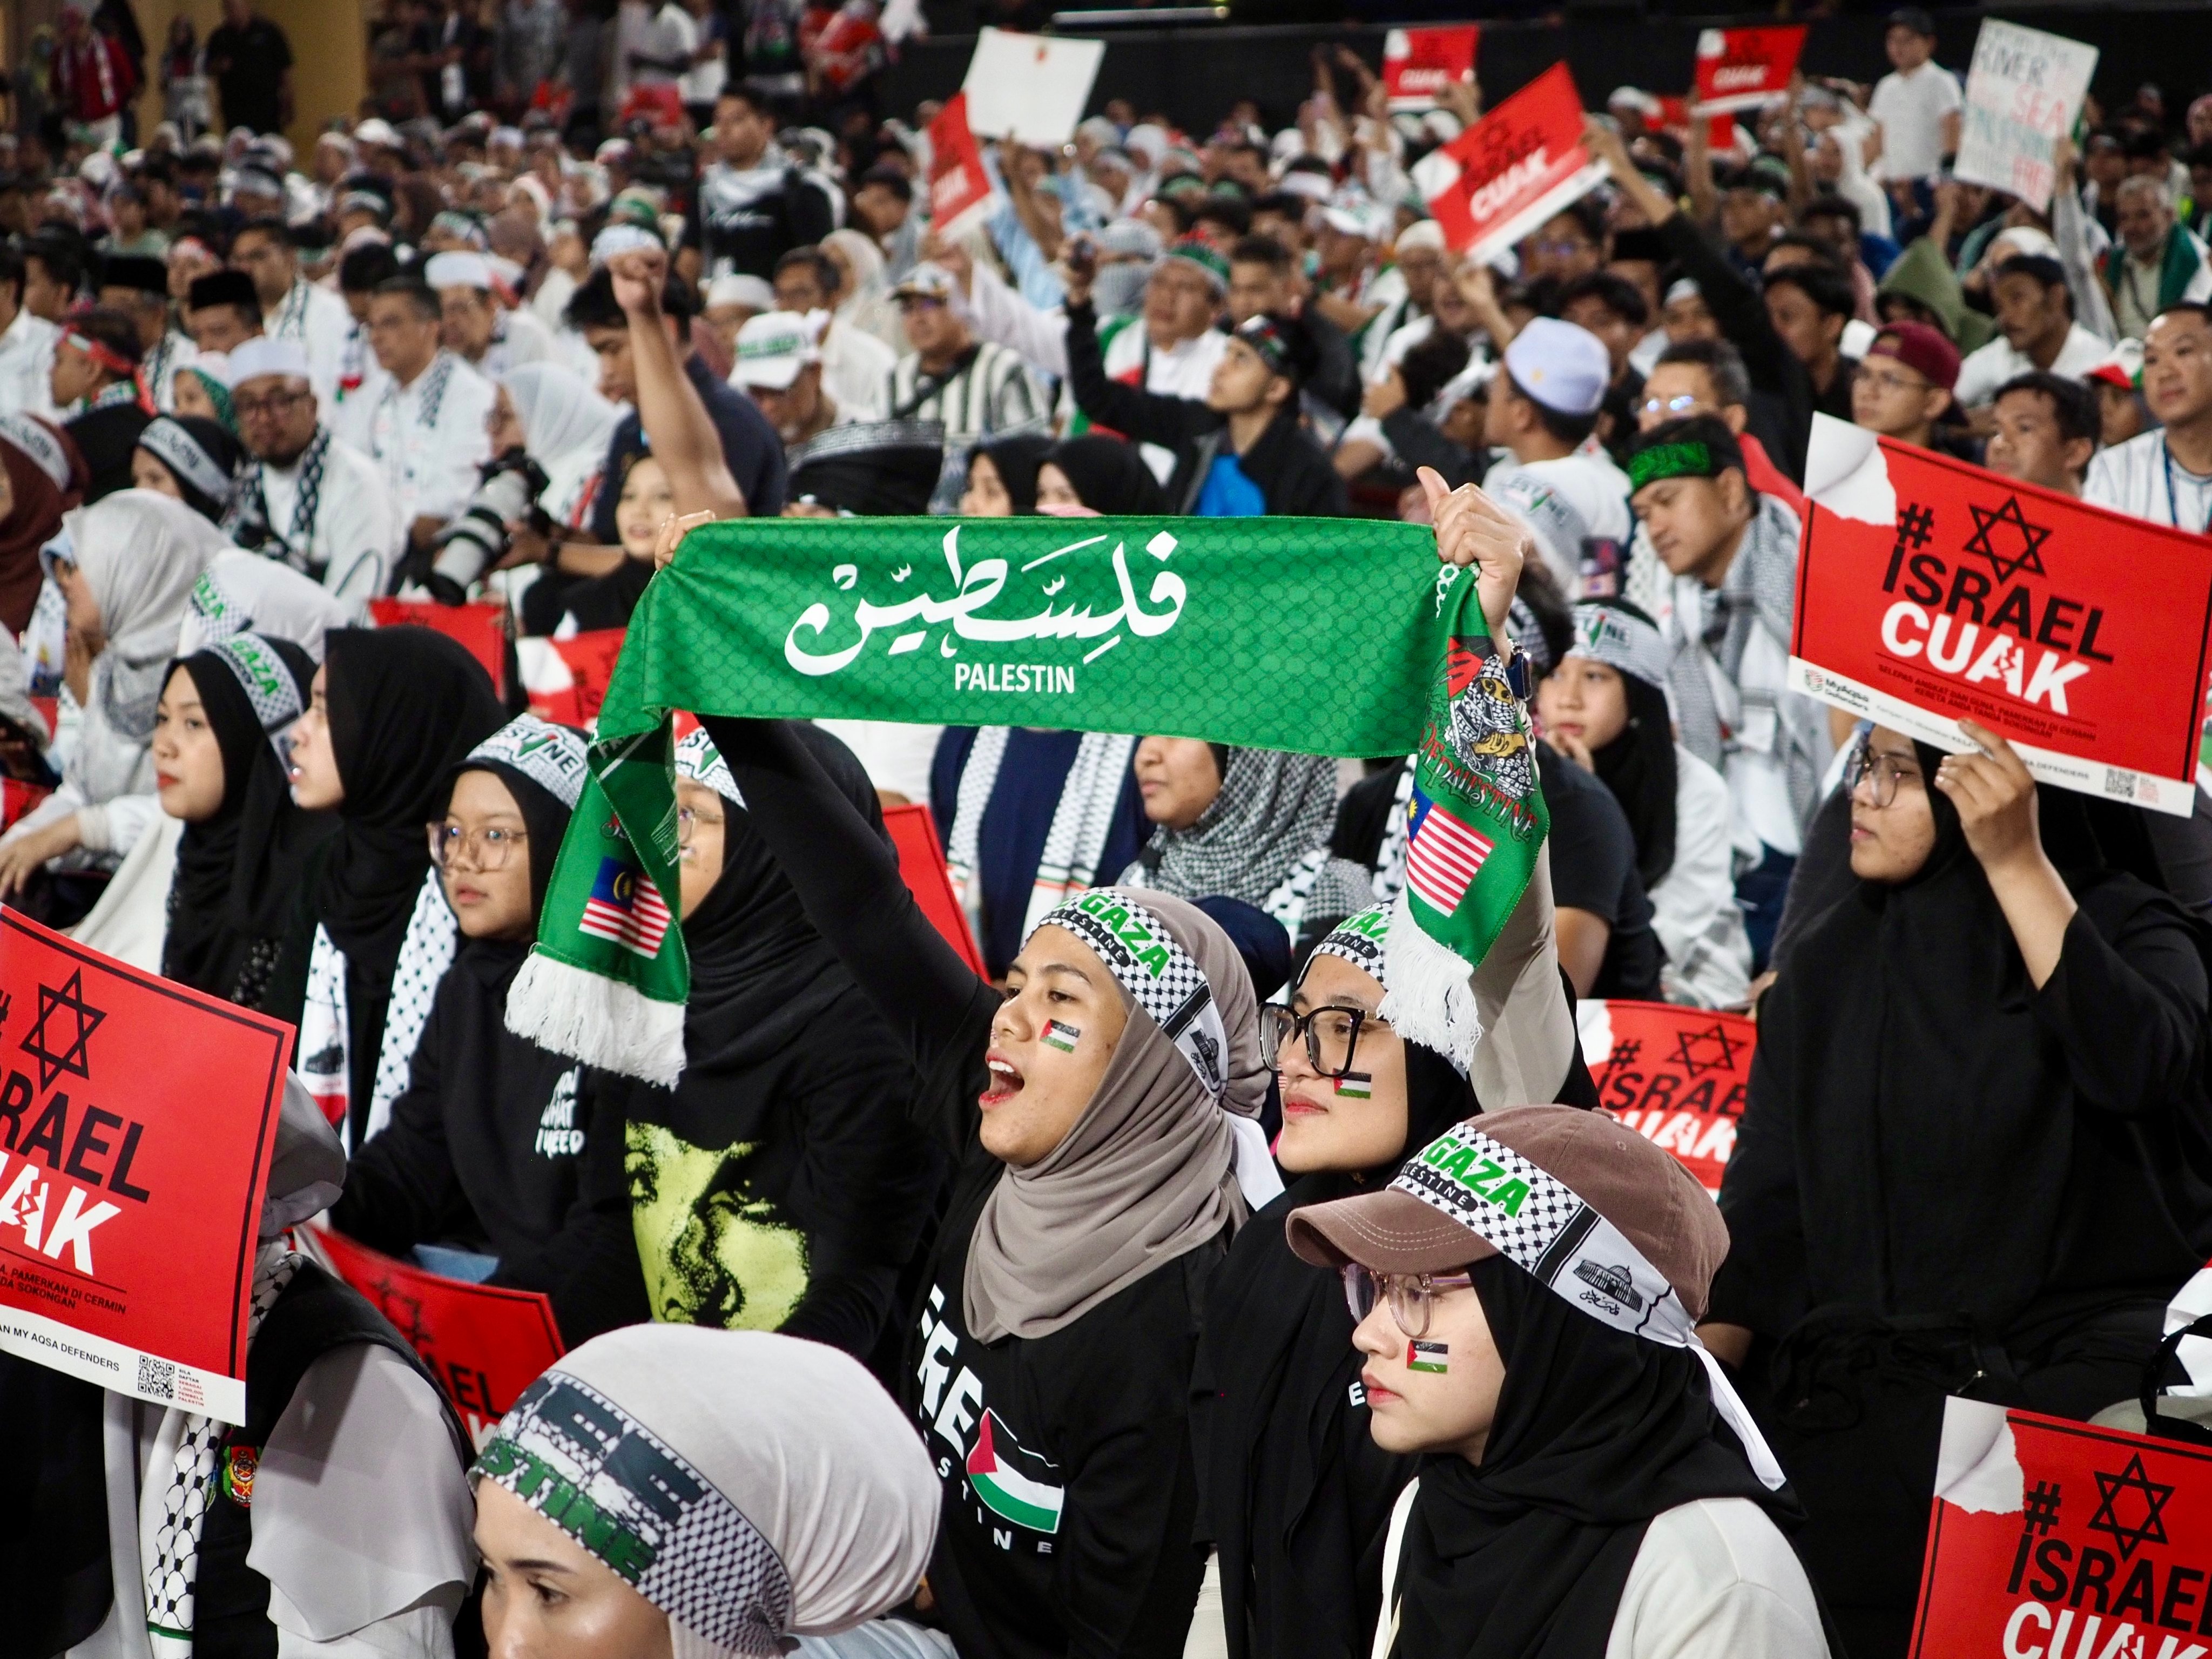 Malaysian Muslims hold up signs and slogans at a pro-Palestine rally in a Kuala Lumpur stadium on Tuesday: Photo: Hadi Azmi